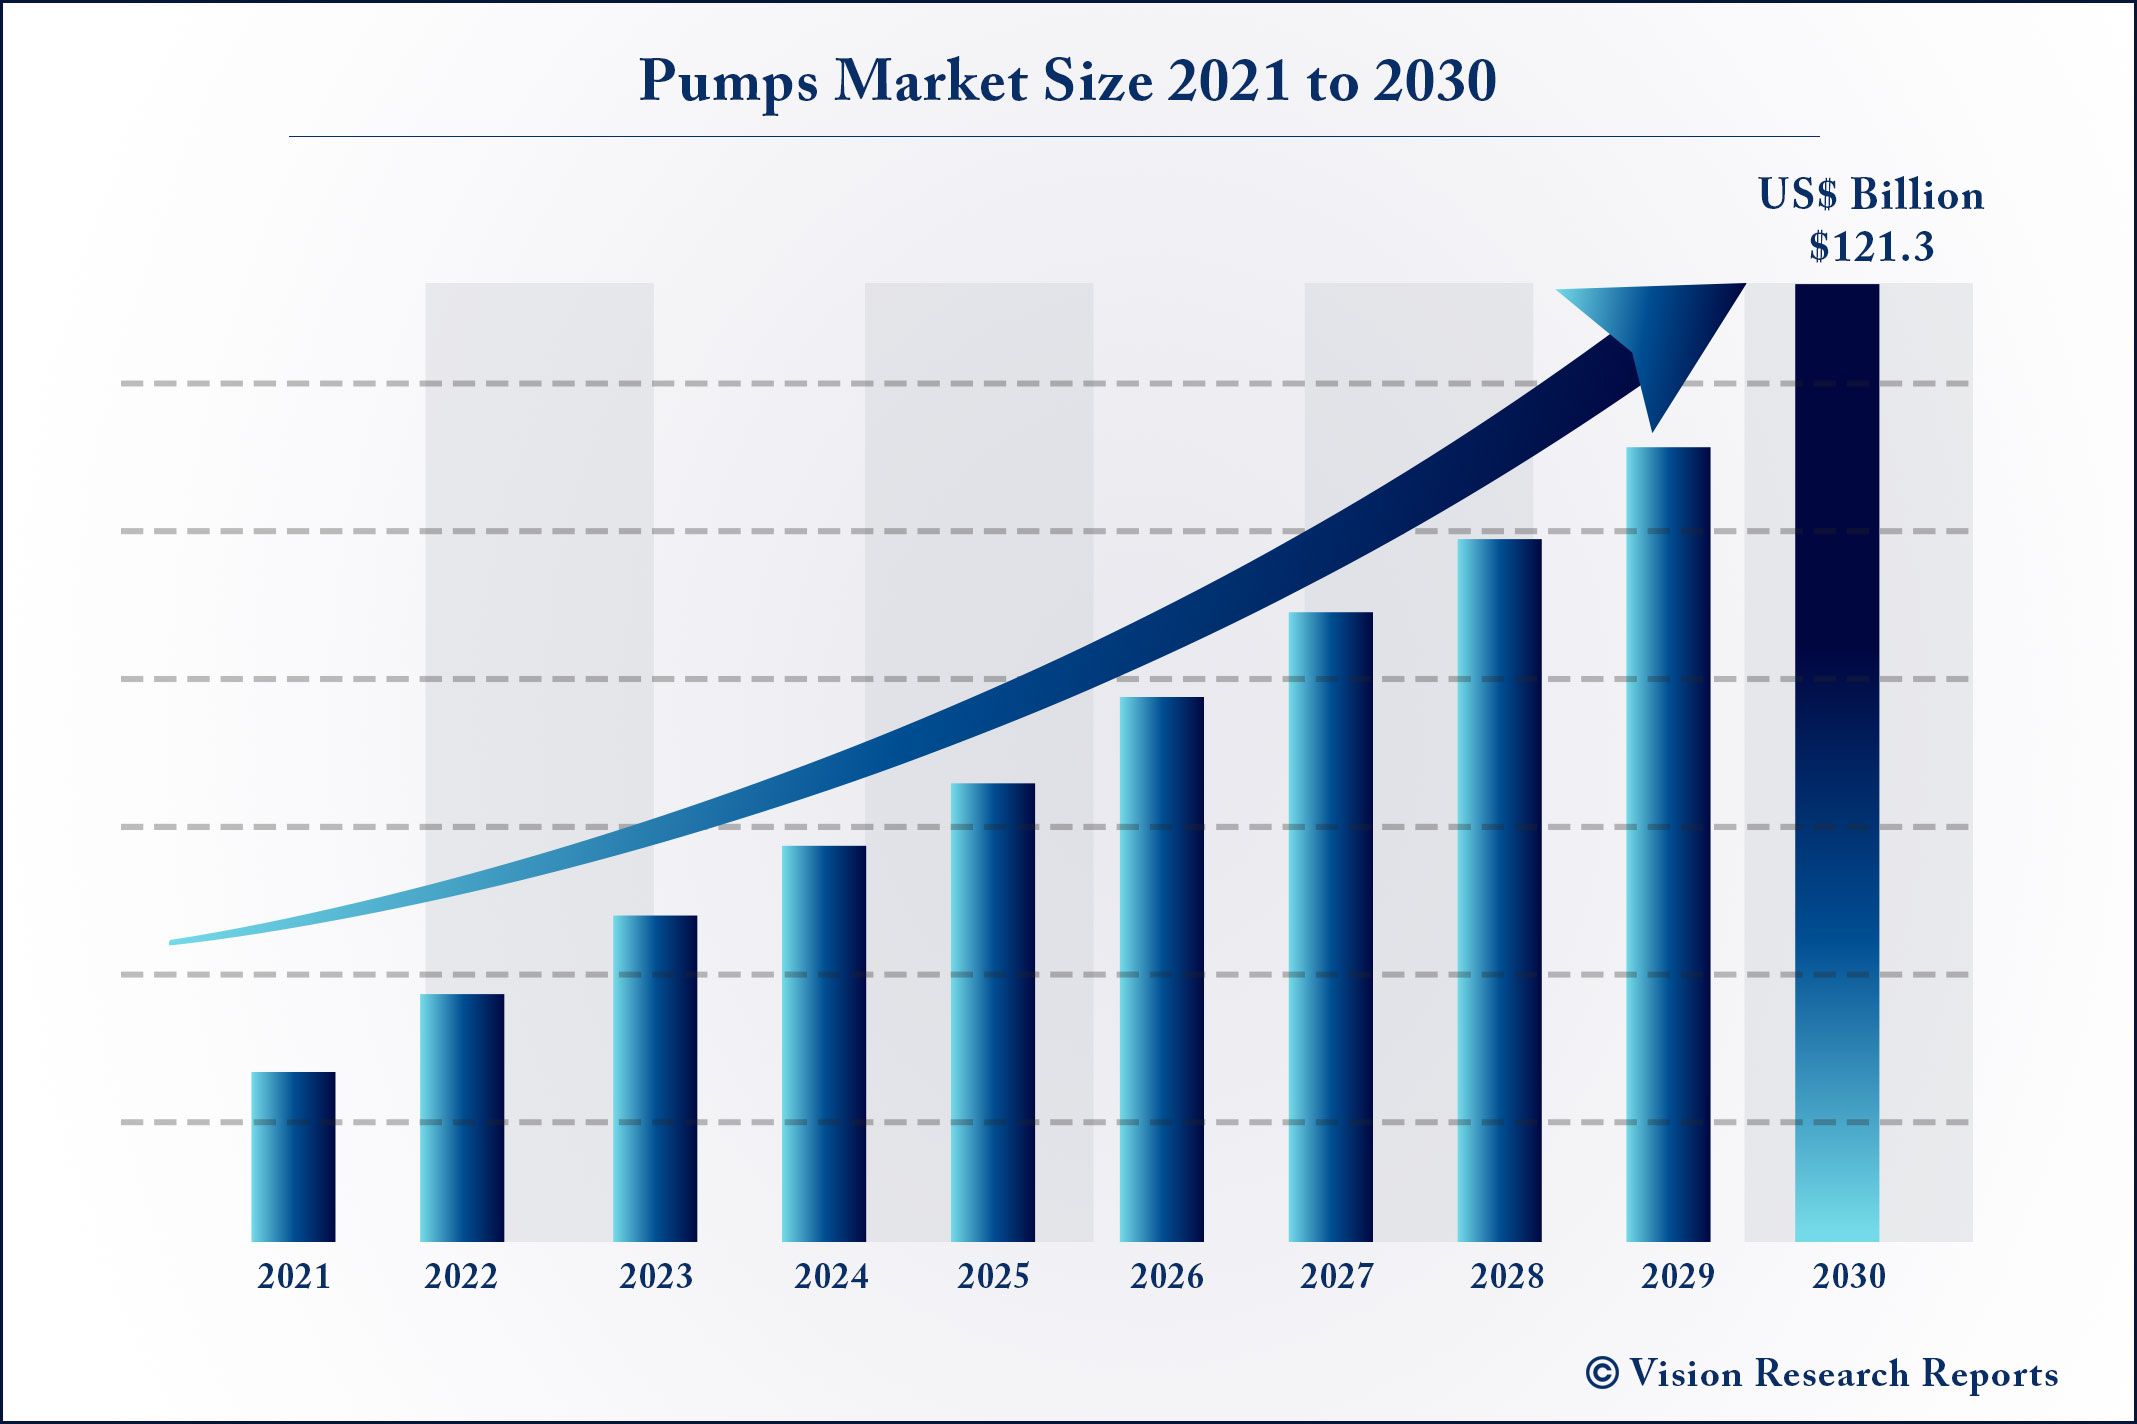 Pumps Market Size 2021 to 2030